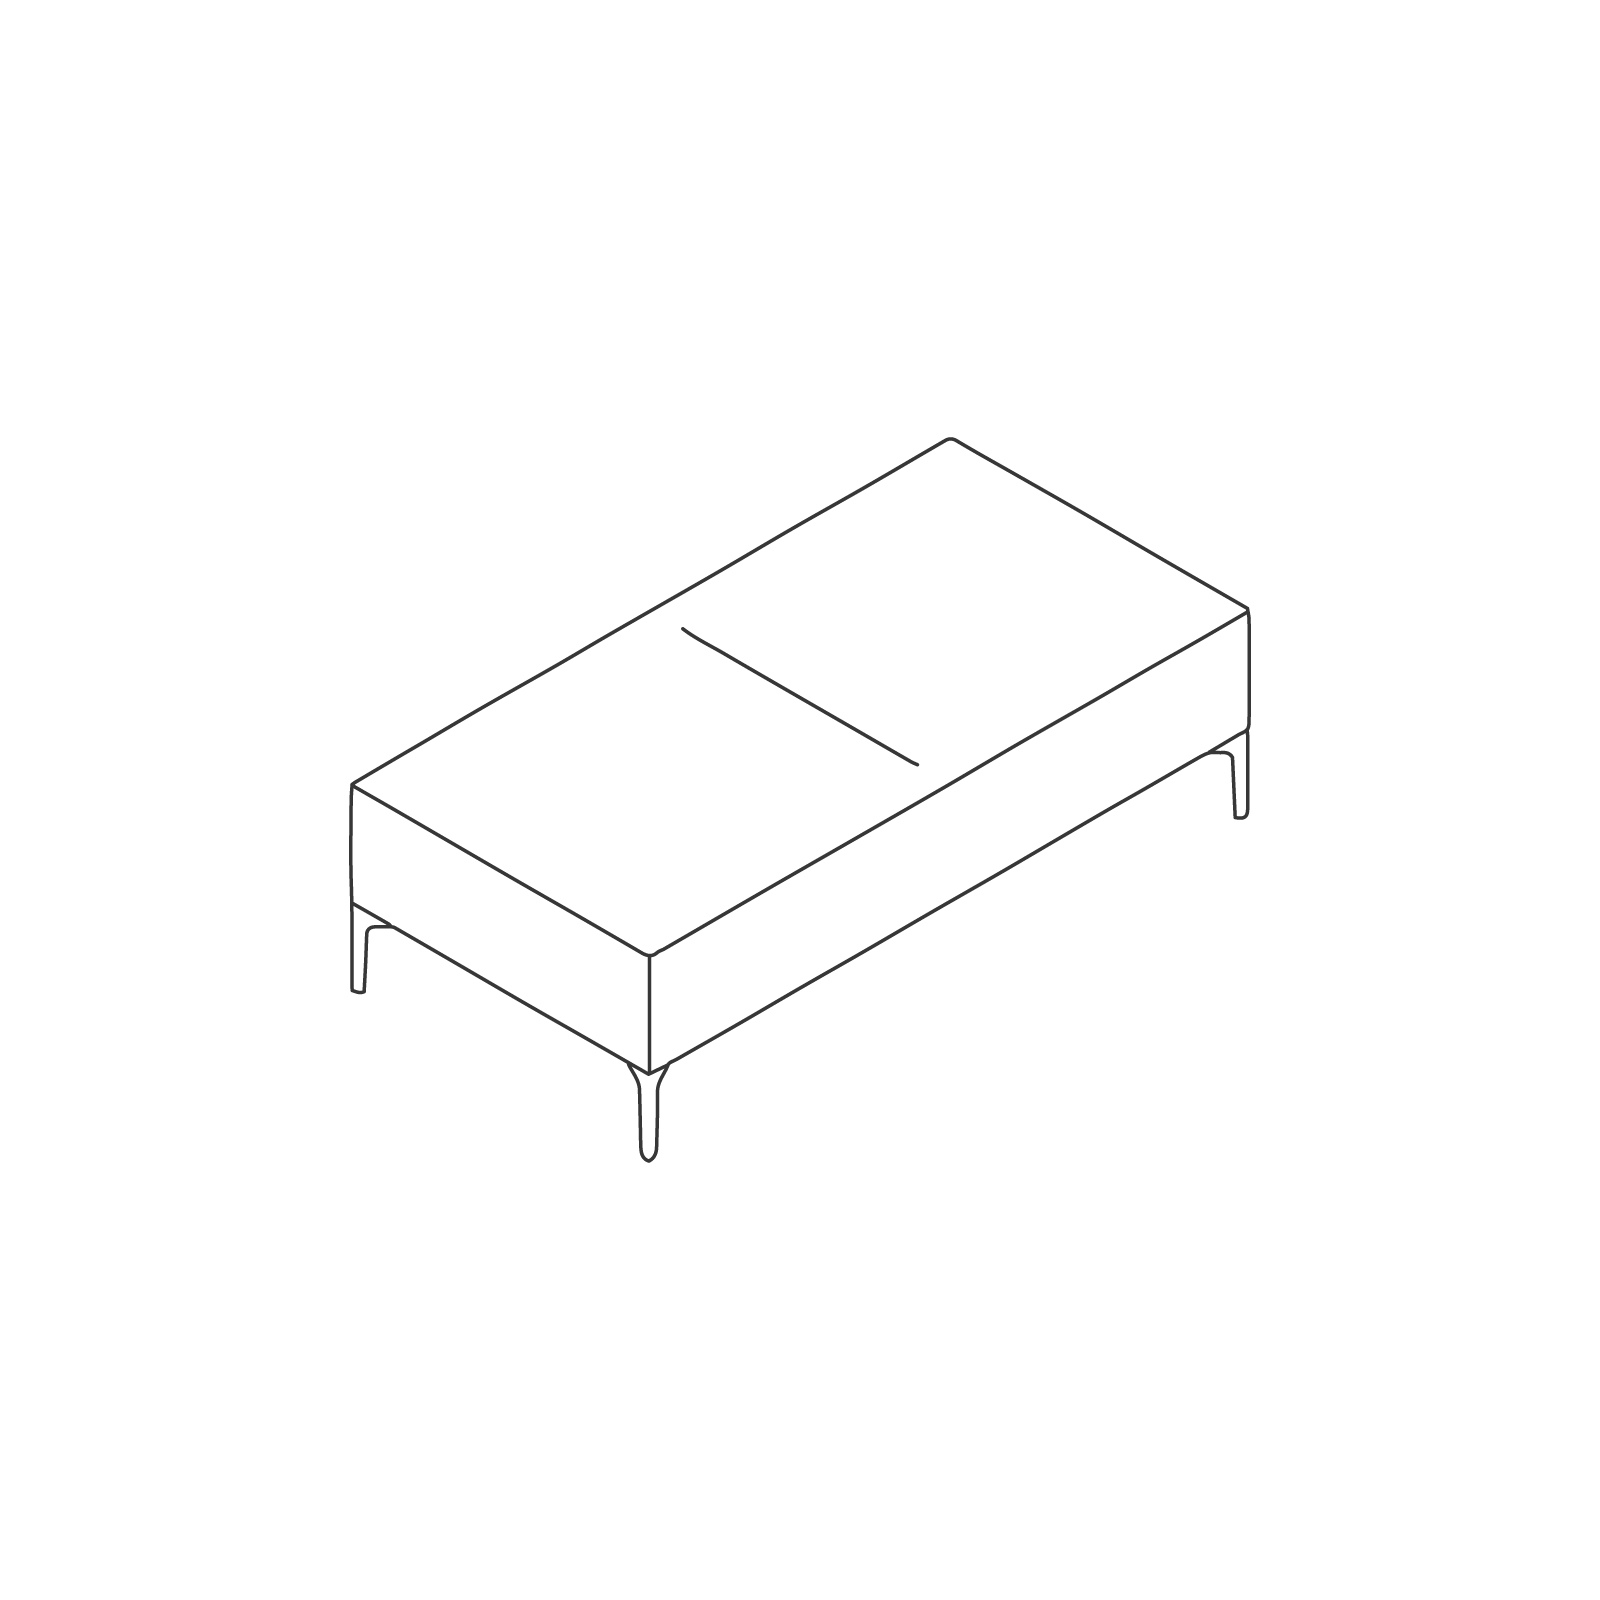 Un dibujo - Sillería modular Symbol – Banca – 2 asientos